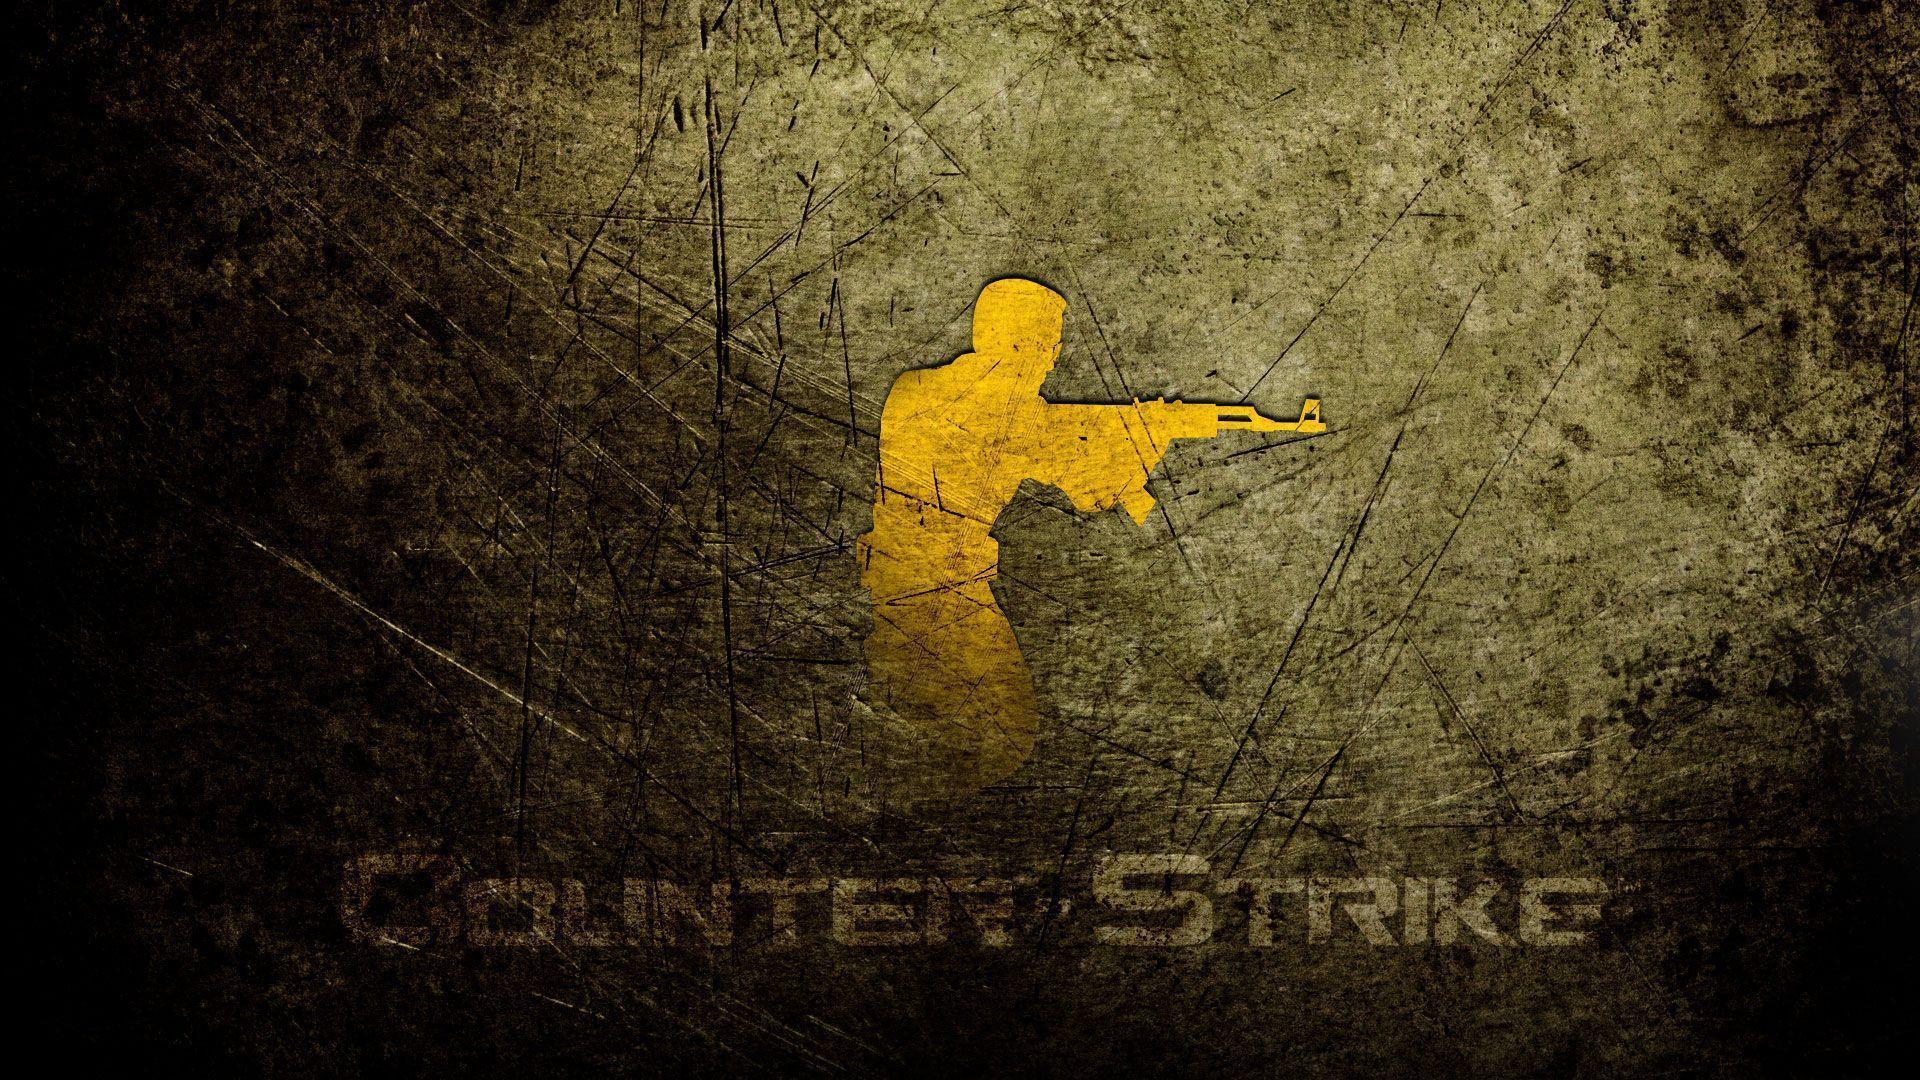 Counter Strike Wallpaper